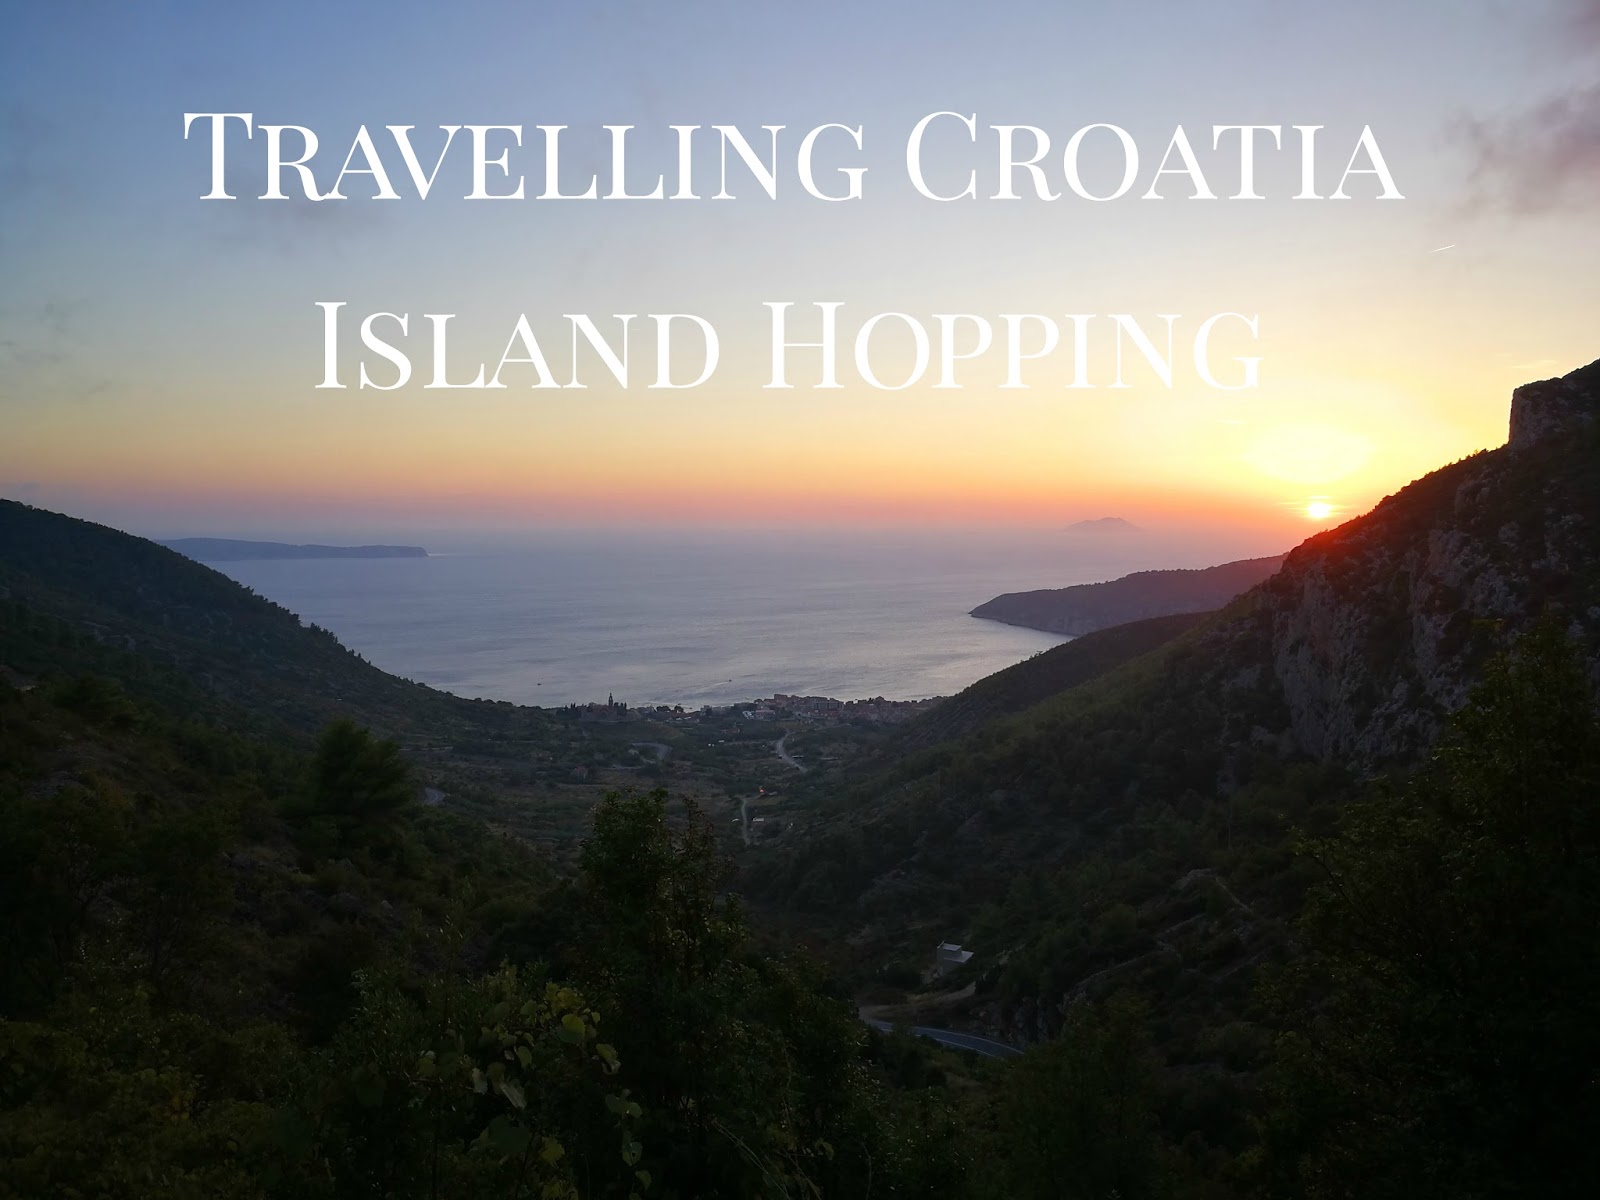 Travelling Croatia - Island Hopping